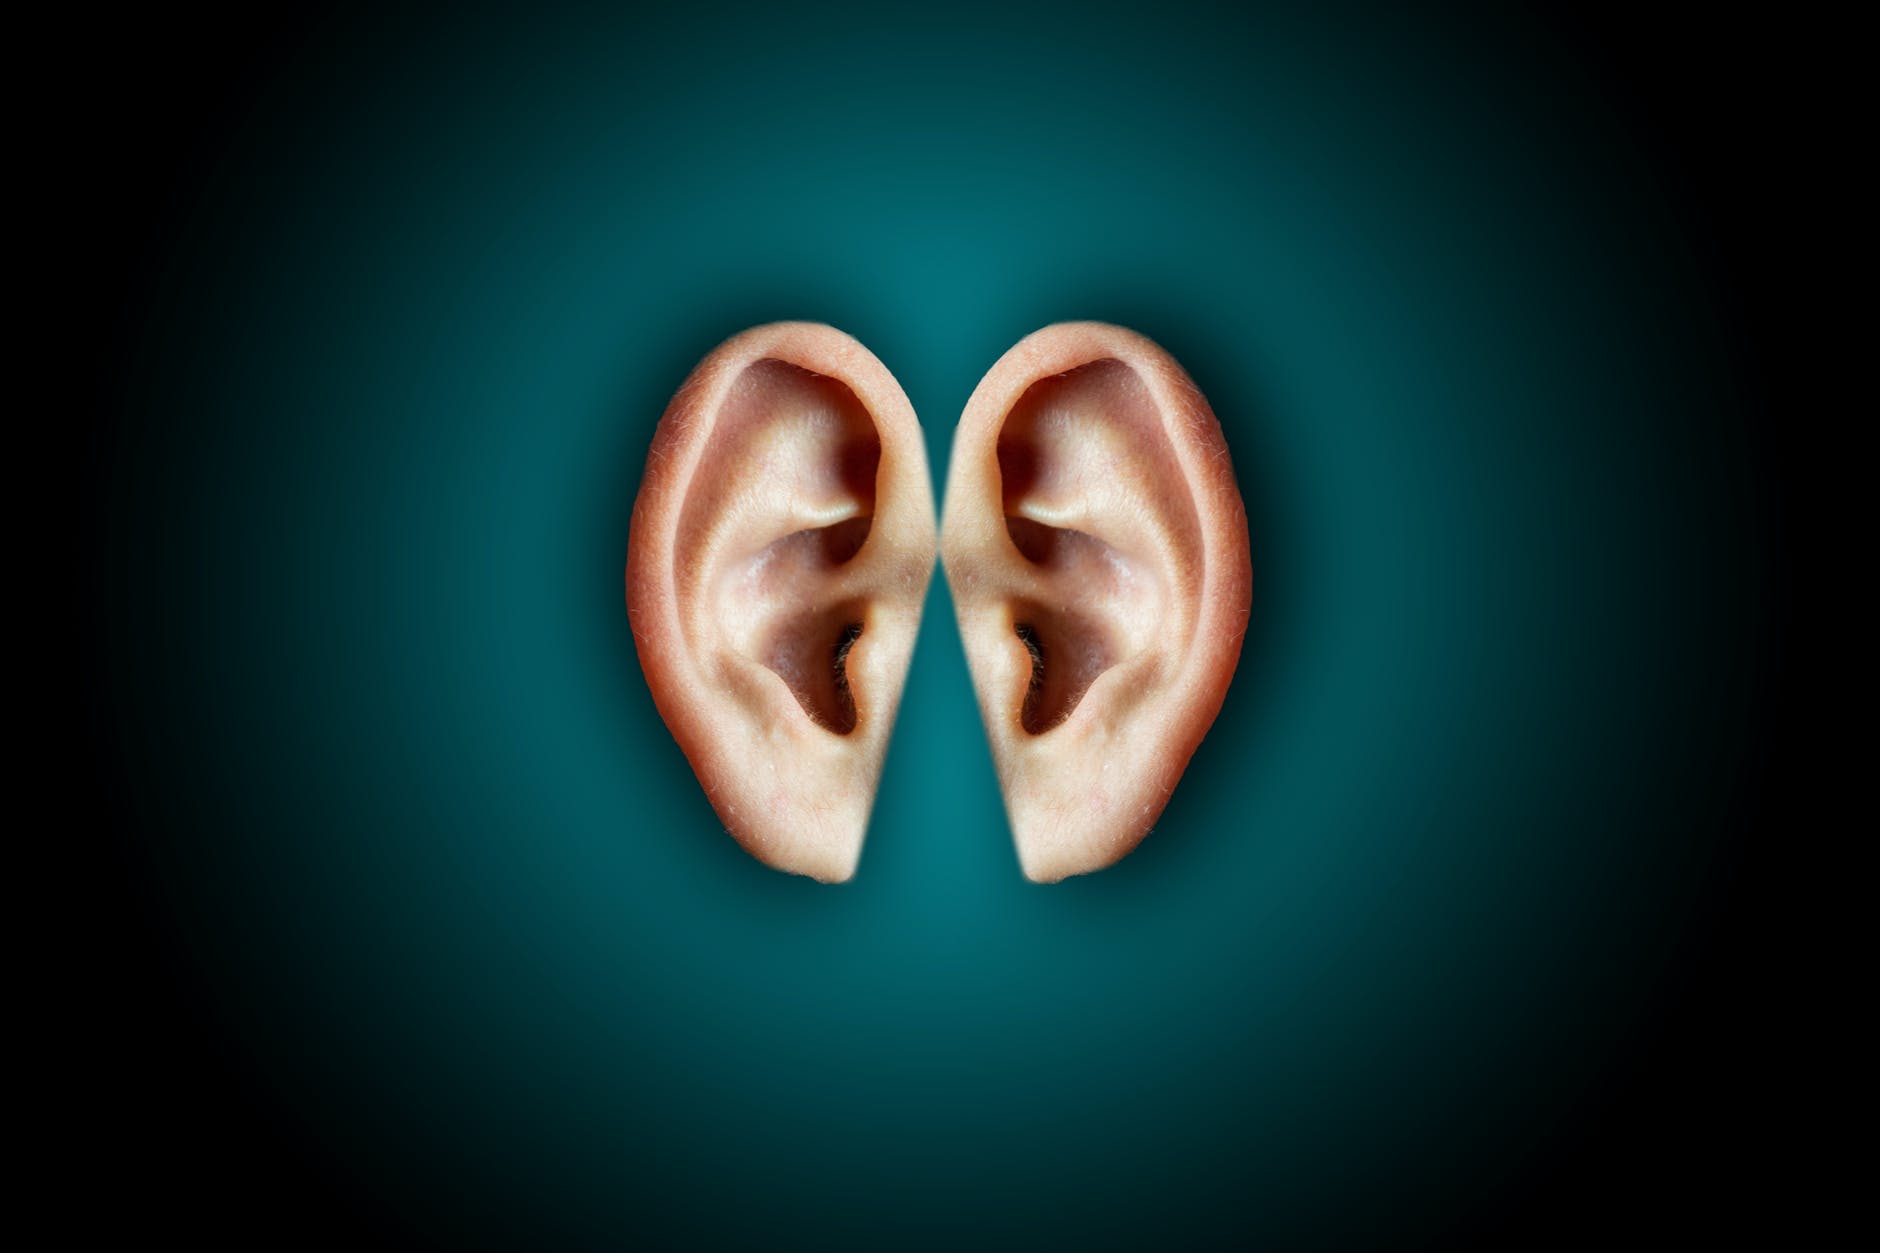 creative shot of human ears on dark background